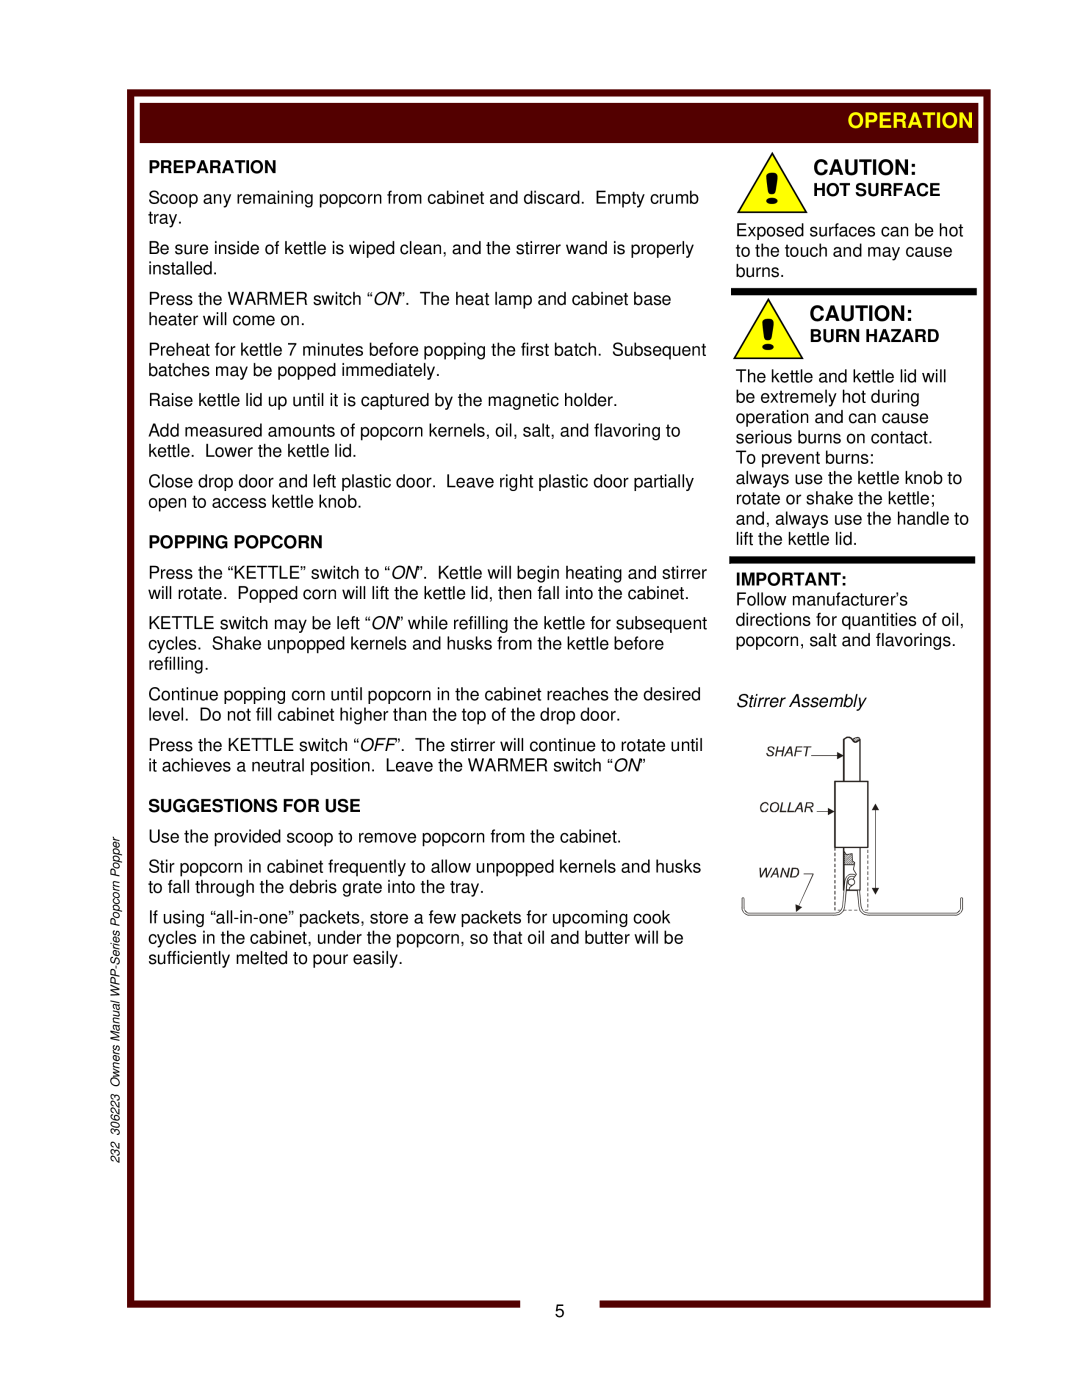 Wells WPP-6 owner manual Hot Surface, Burn Hazard, Stirrer Assembly 